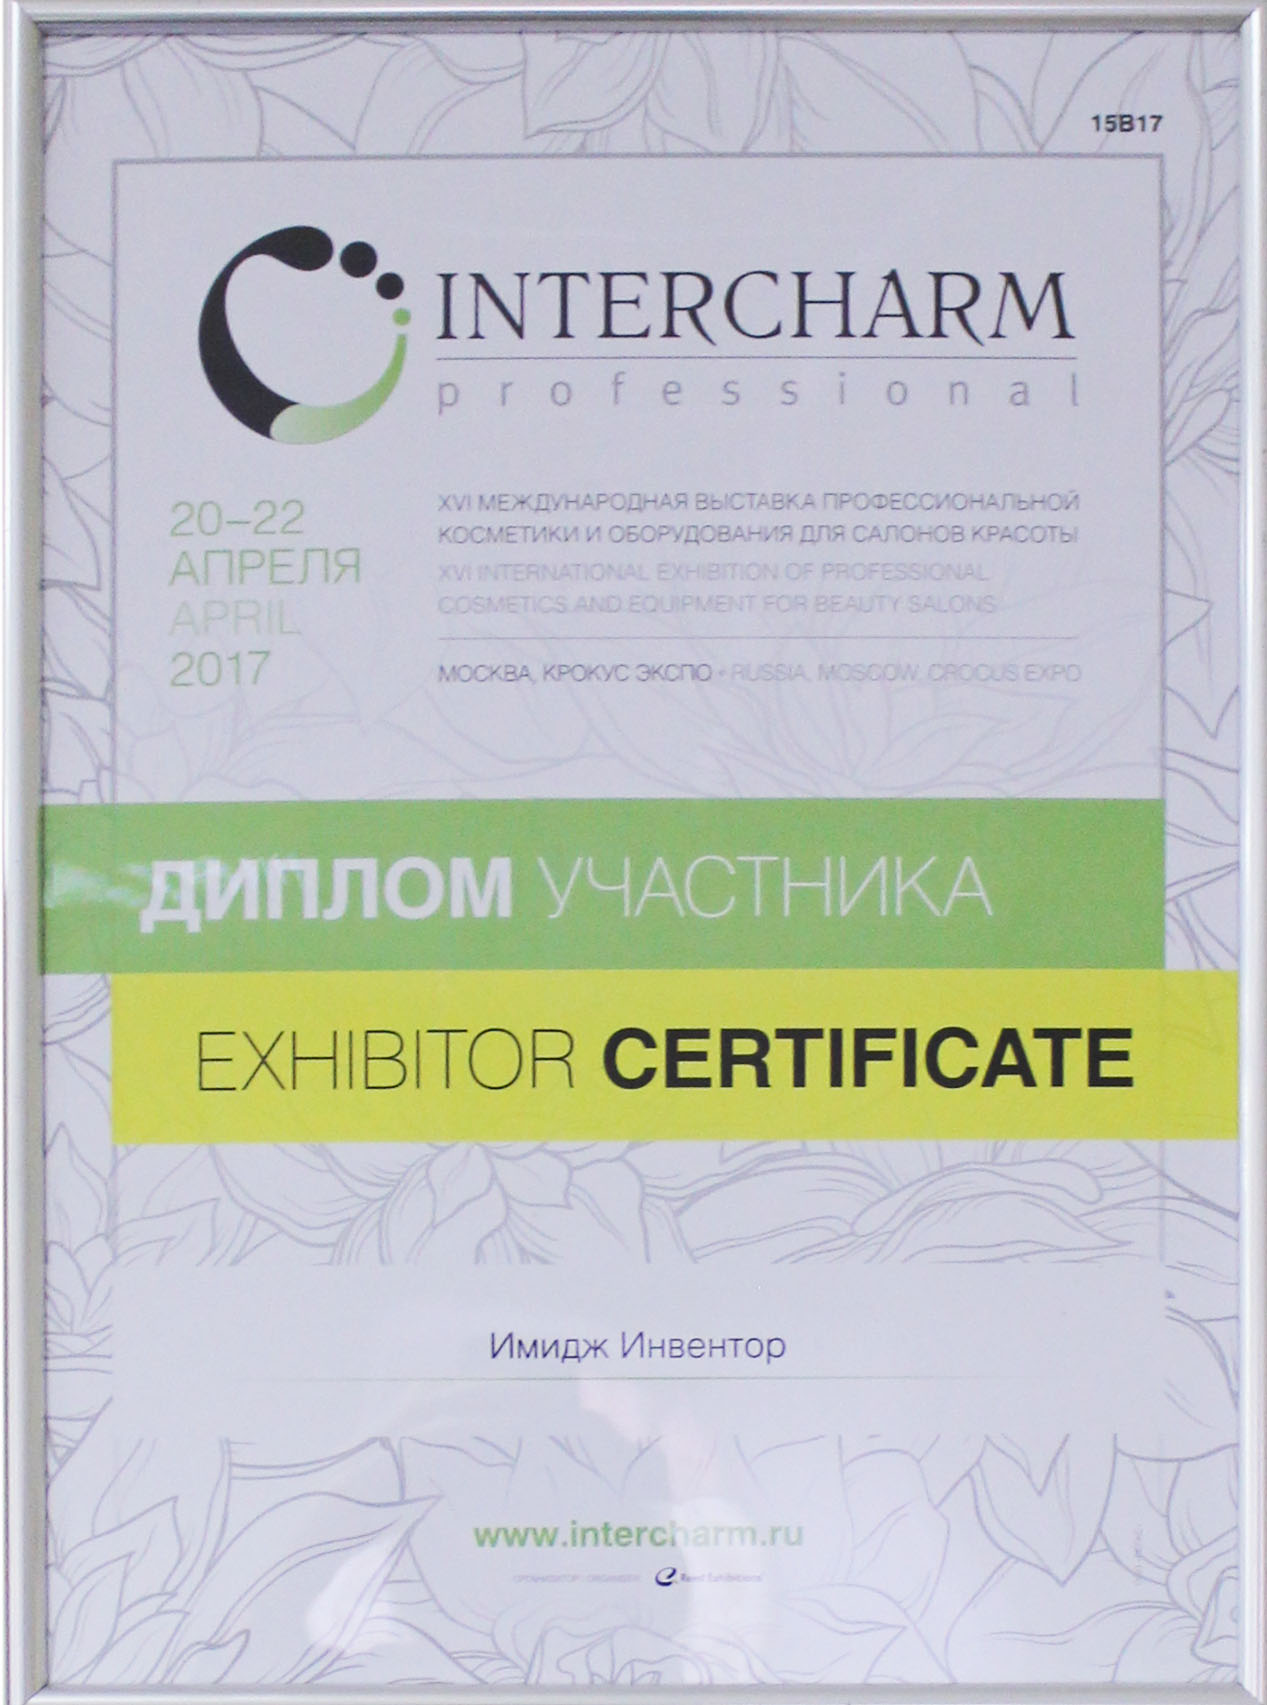 InterCharm 2017